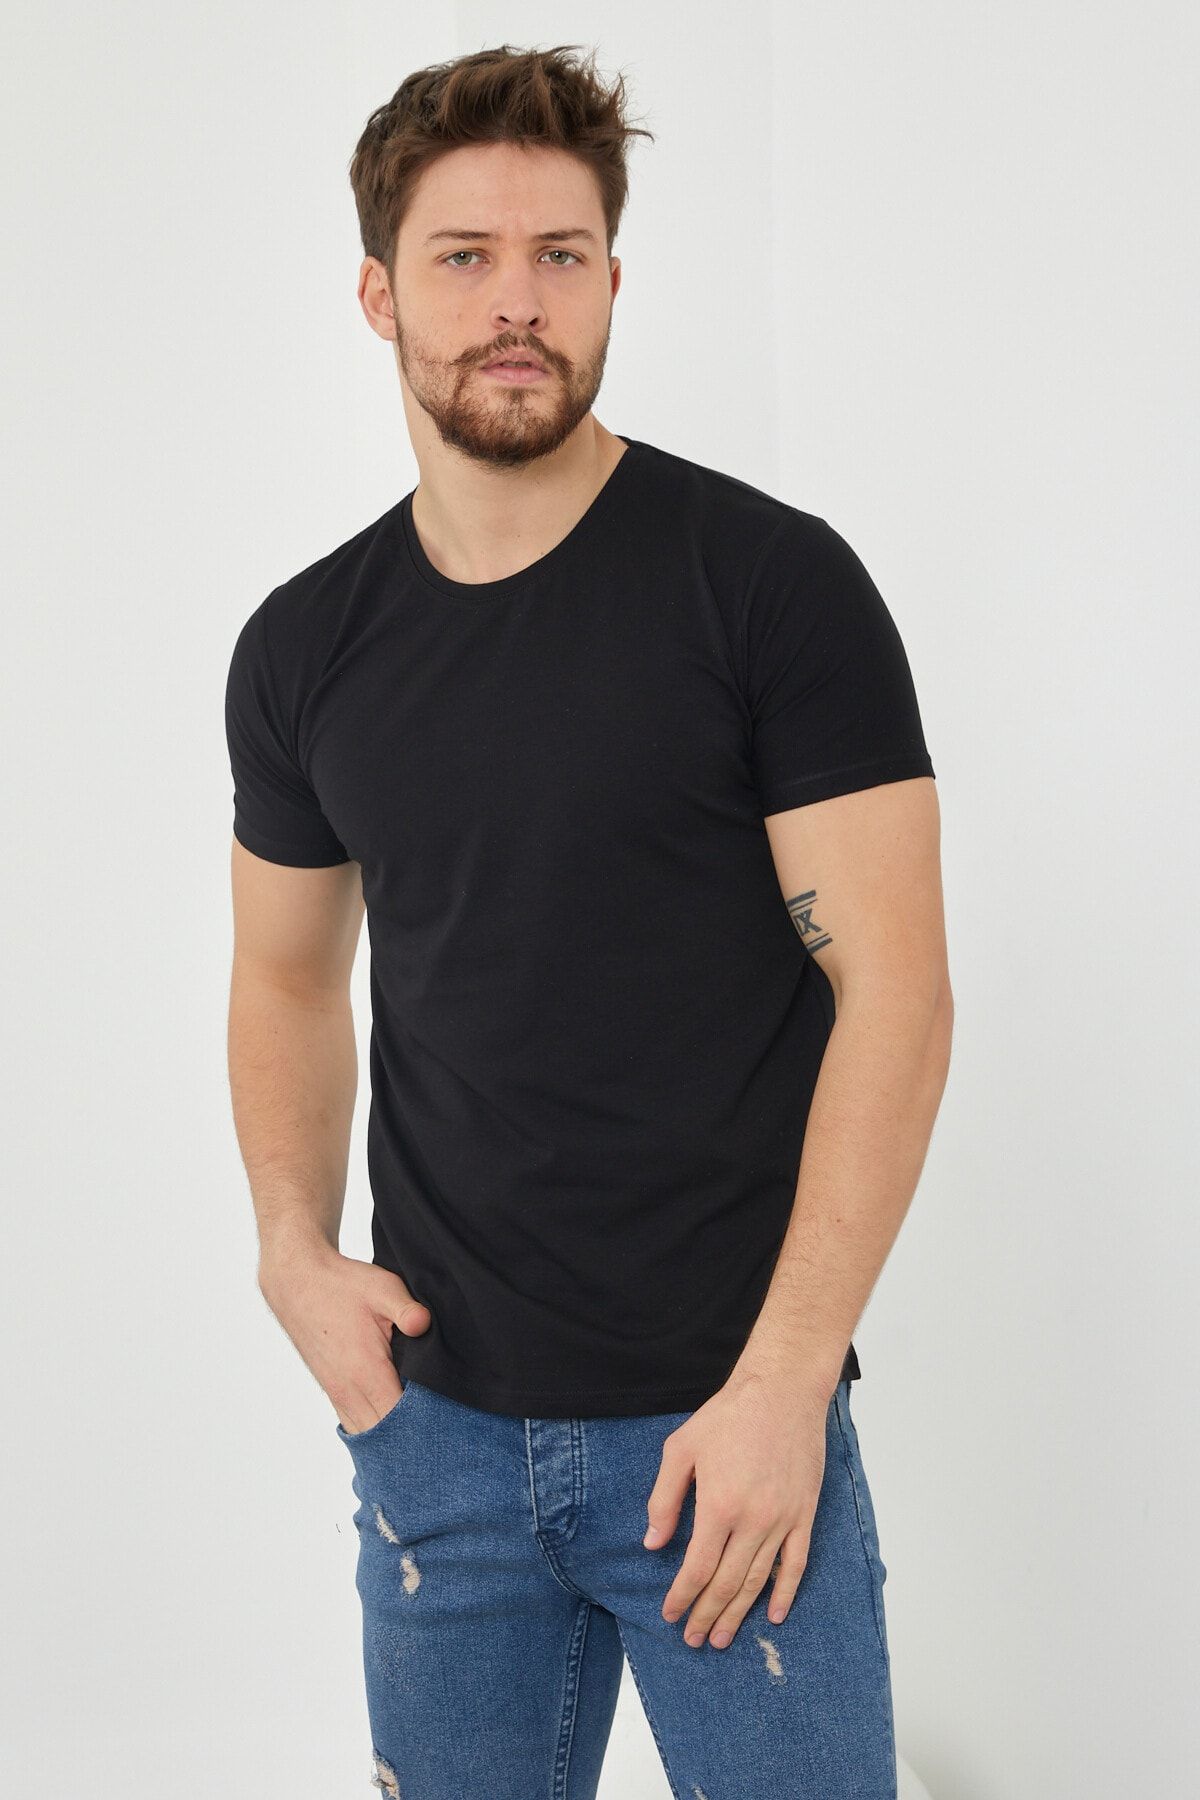 Tarz Cool Erkek Siyah Düz Slim Fit Likralı T-shirt dztsrtr06s